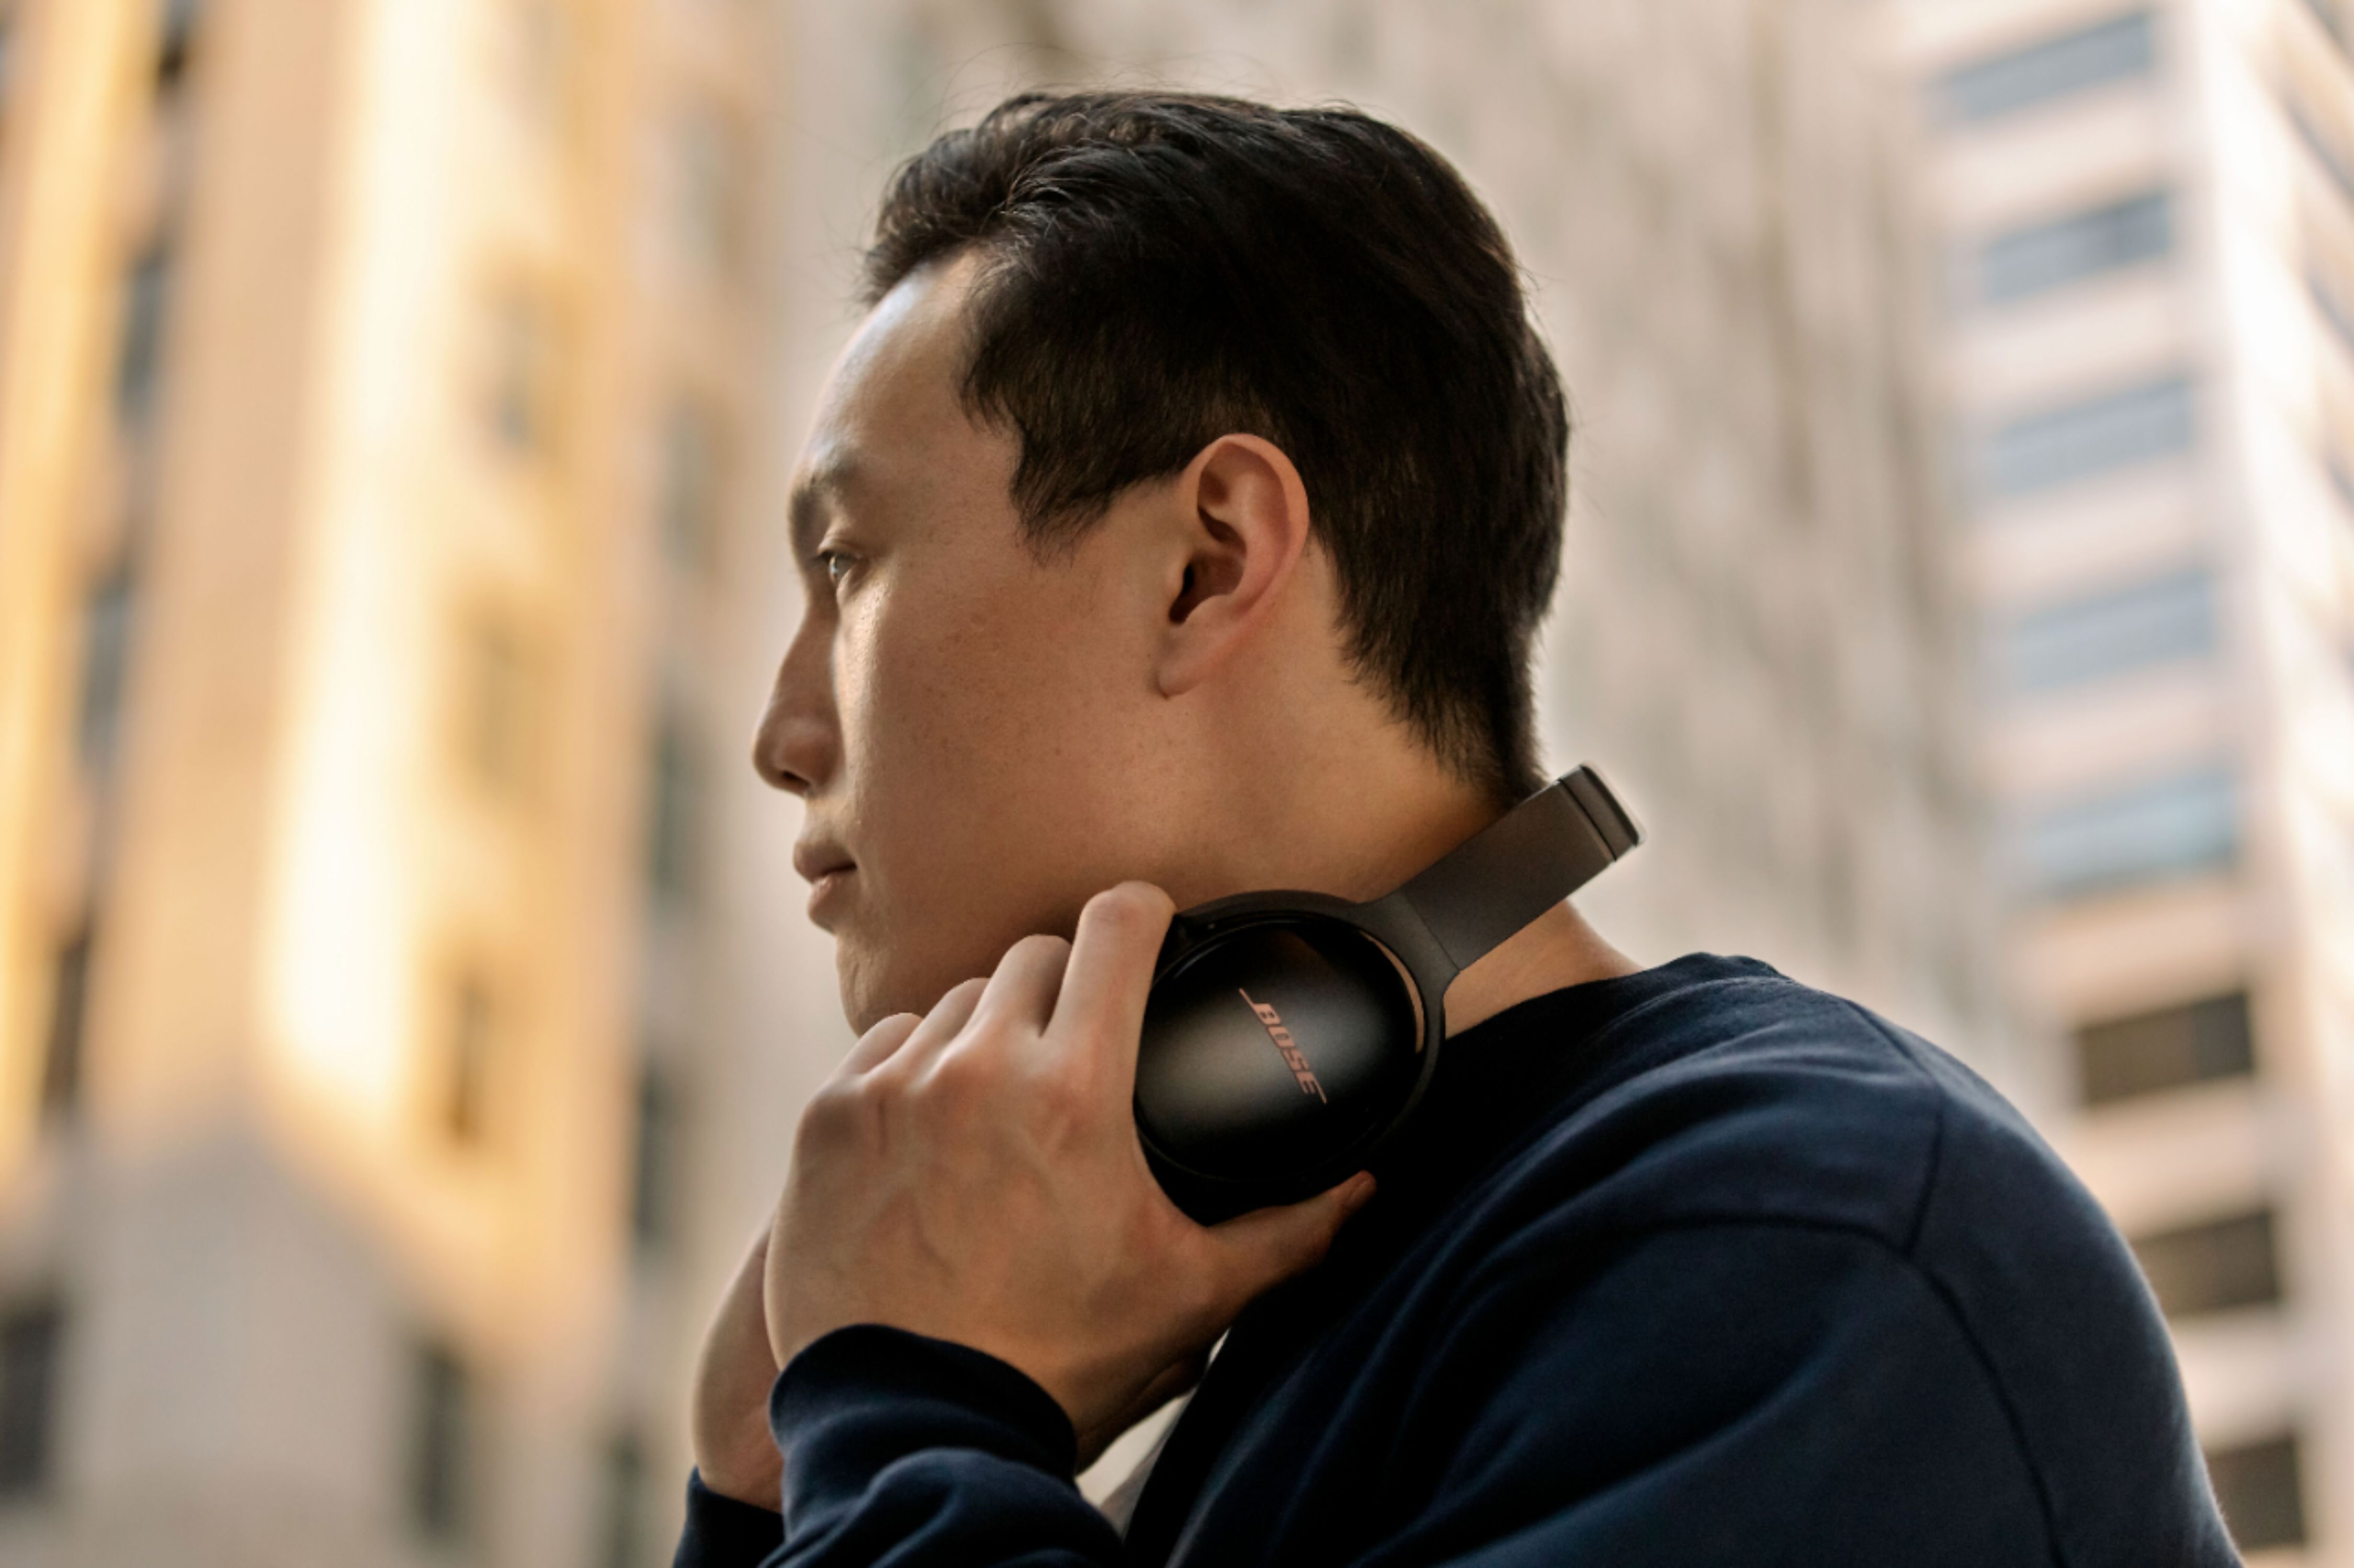 Bose QuietComfort 35 Wireless Noise Cancelling Headphones Series I - R —  Joe's Gaming & Electronics